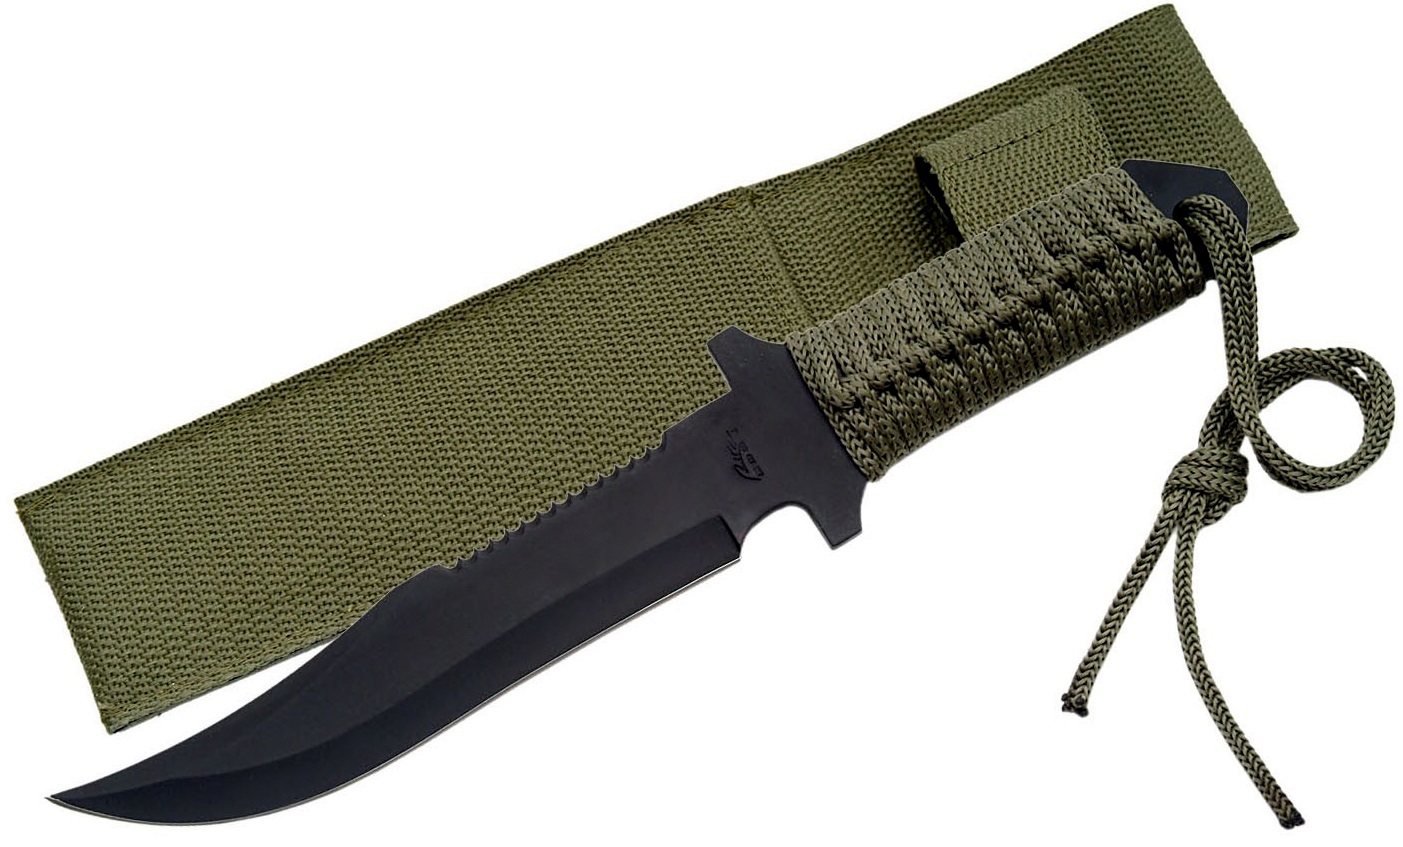 Poignard couteau tactique 29,5cm militaire - Full tang